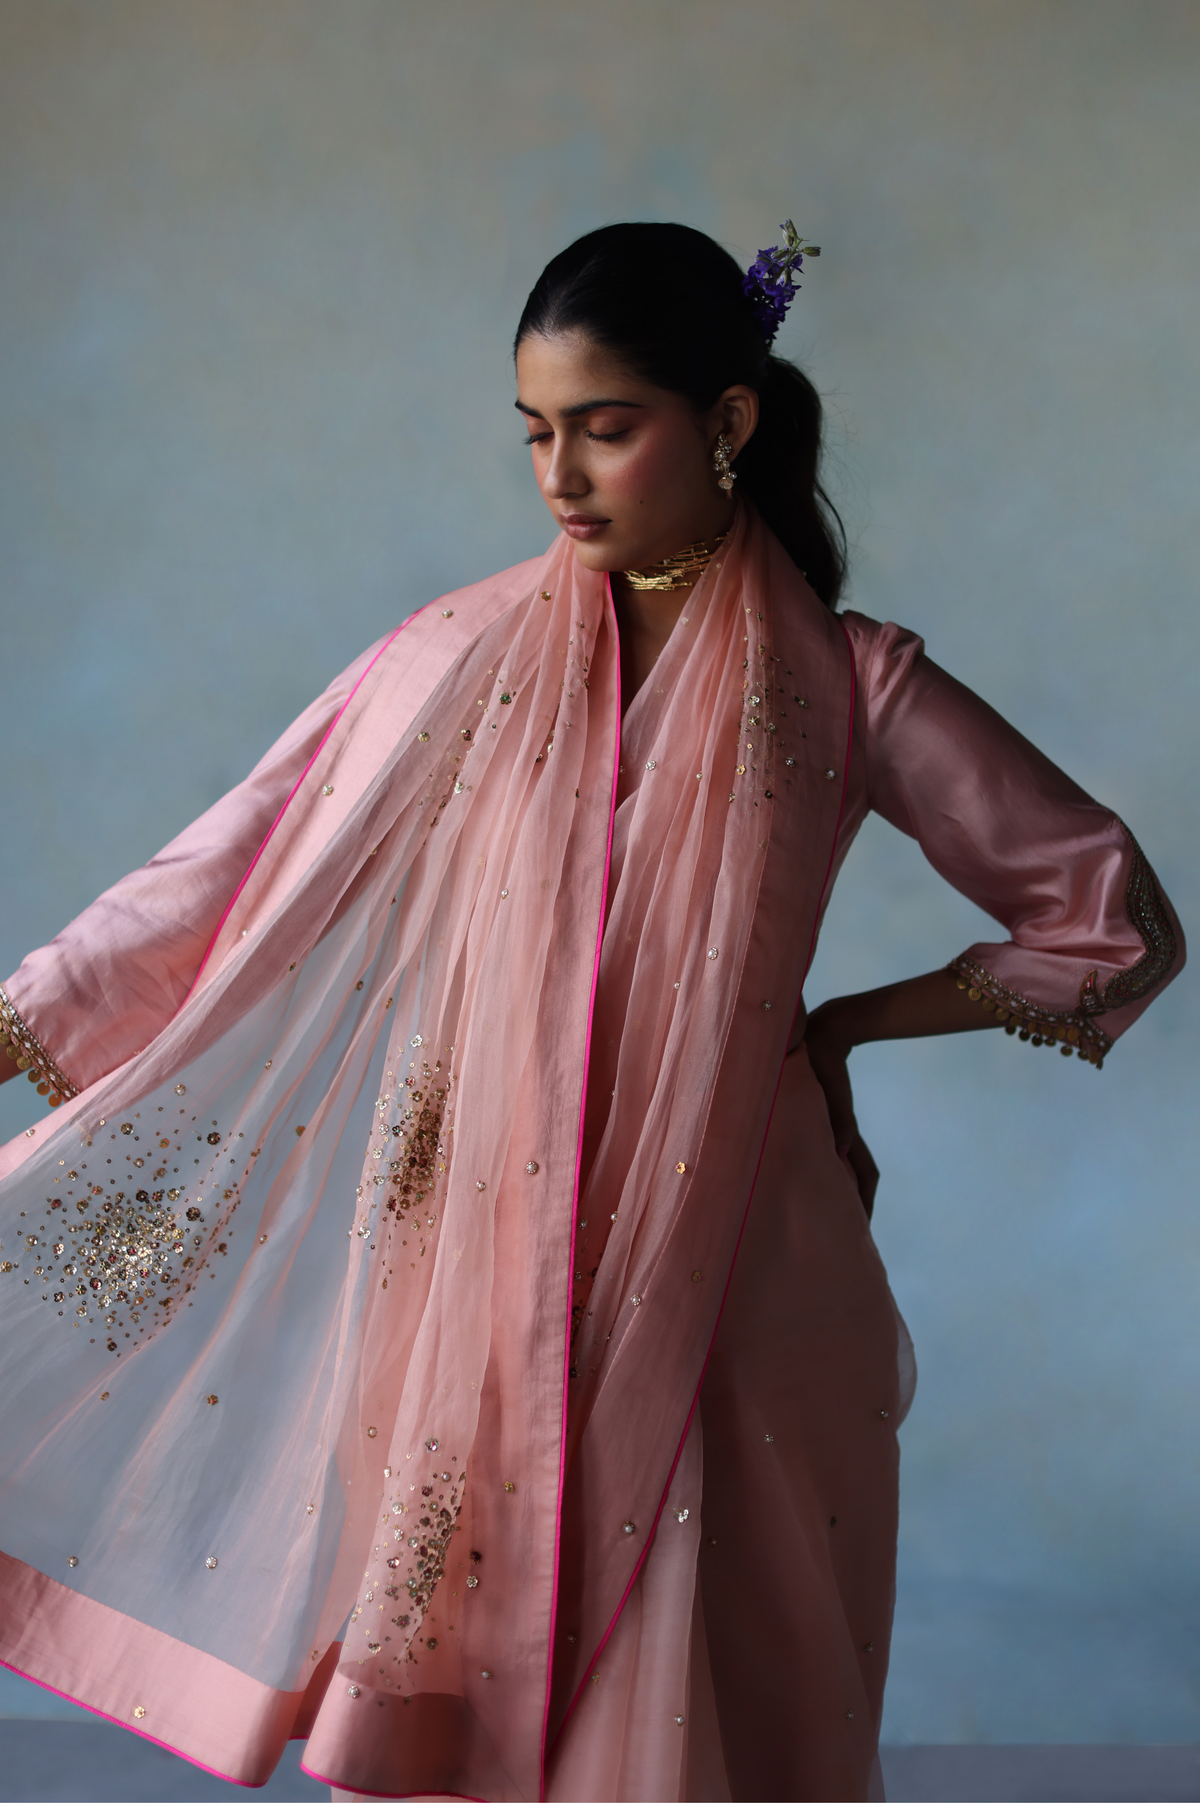 Gul Hot Pink Sequin Flower Sari